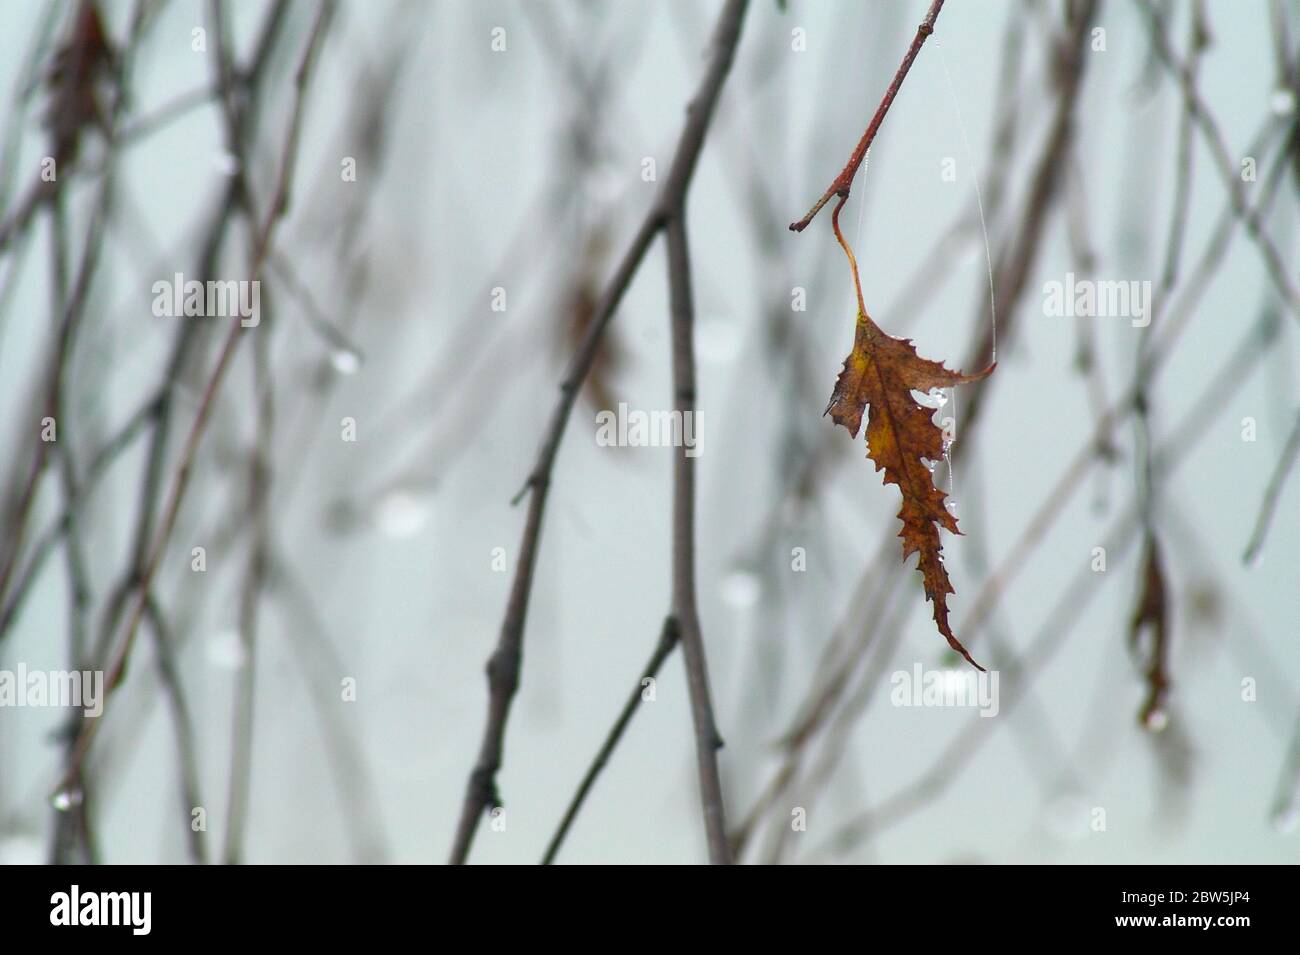 Wet twigs during rain with water drops close up. Nasse Zweige bei Regen mit Wassertropfen. Mokre gałązki w czasie deszczu z kroplami wody. 在雨期間與水滴的濕樹枝 Stock Photo